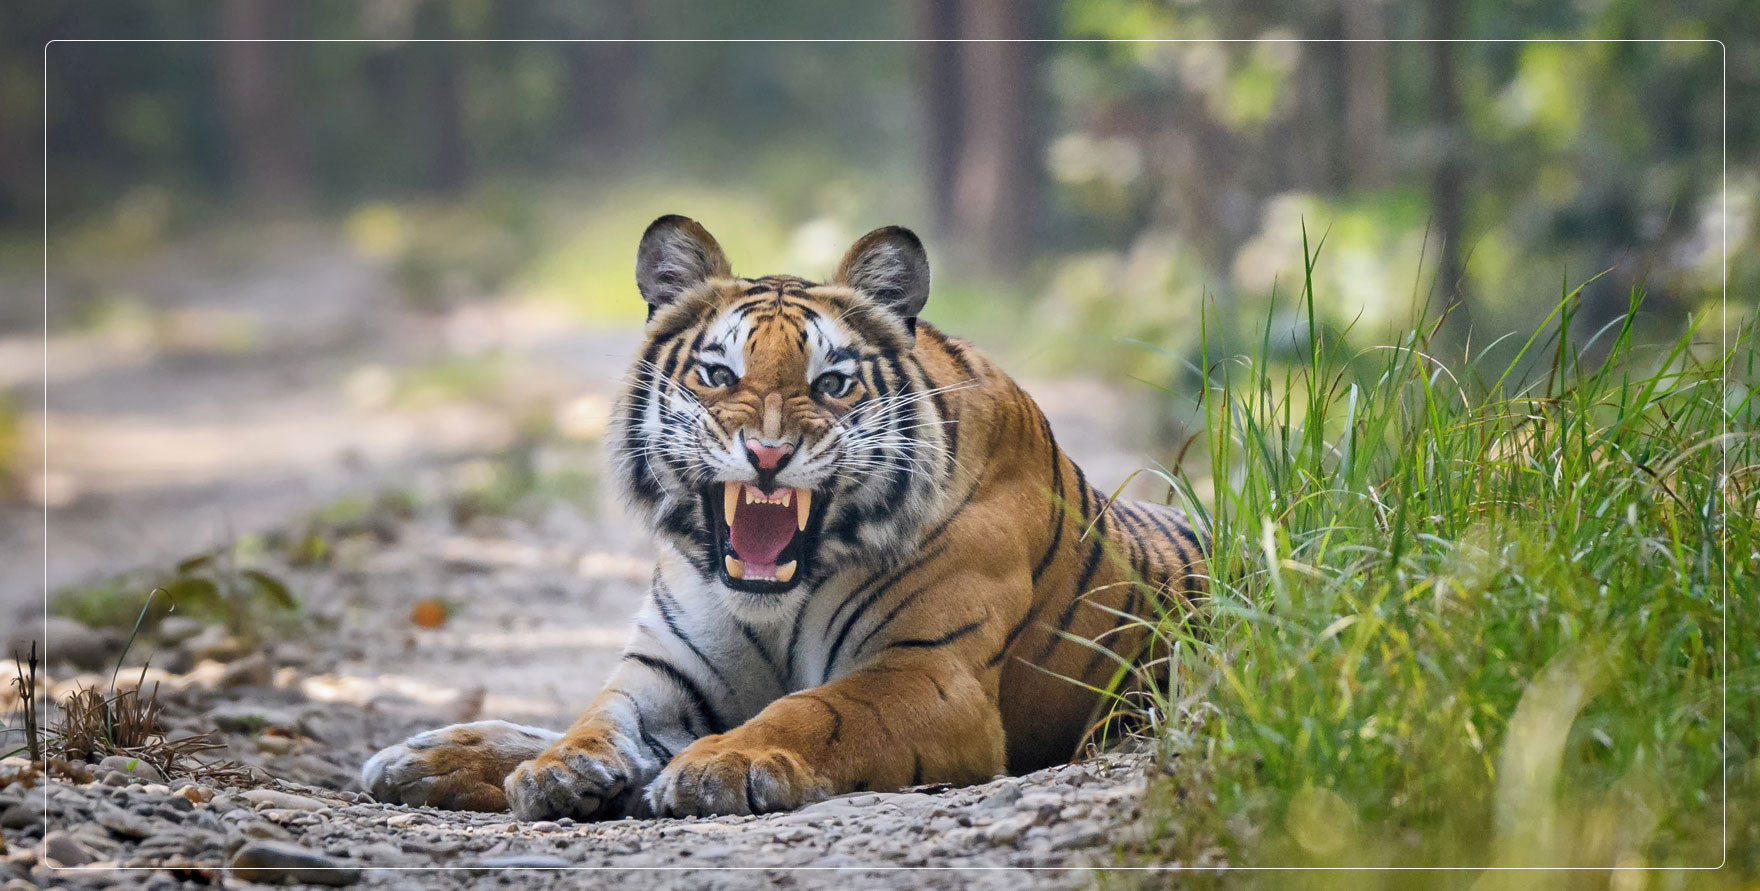 deepak rajbangshi-wildlife photographer-photo-tiger-bardiya 11706920067.jpg